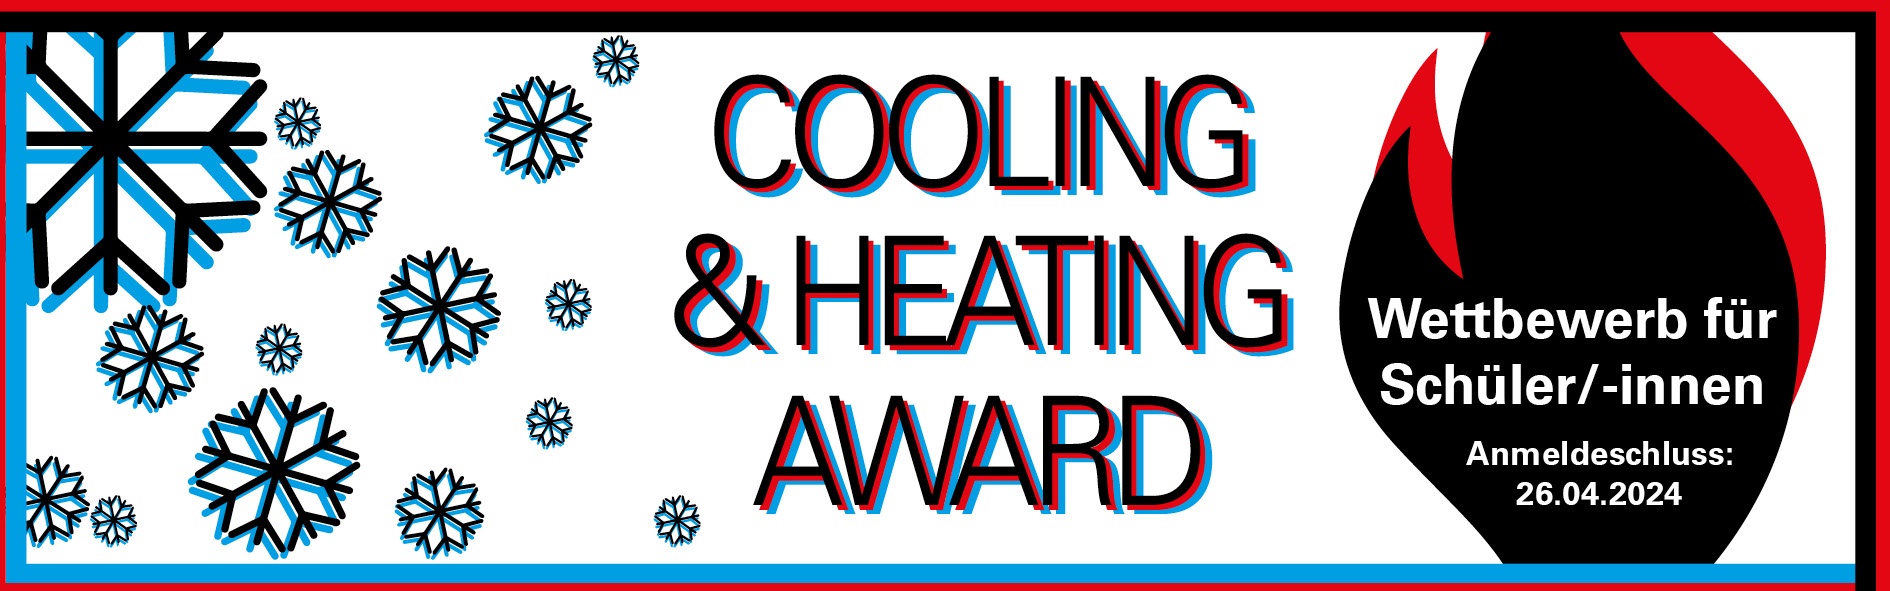 2023_11_30_header_cooling-heating-award-2024.jpg_274269570